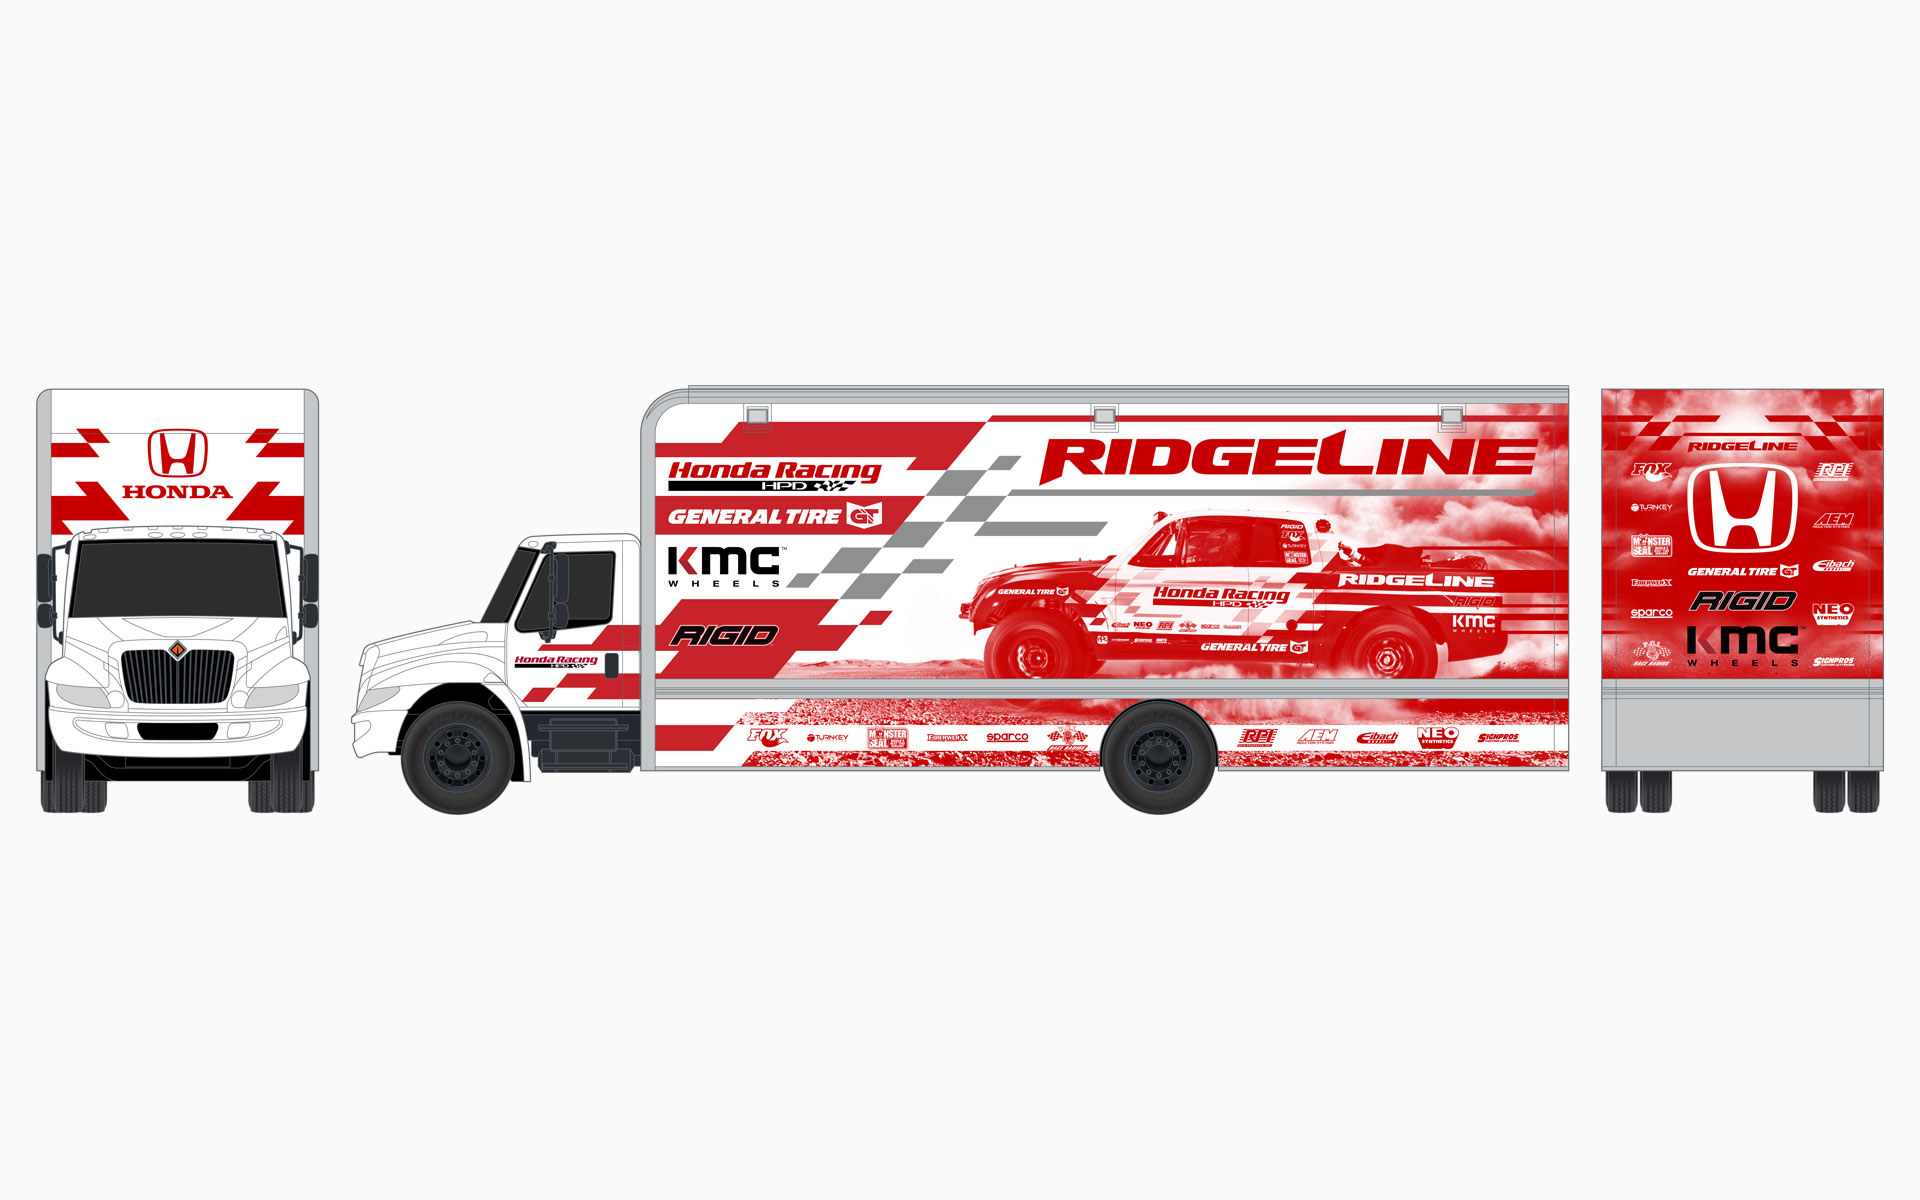 2016 Honda Off-Road HPD Ridgeline Transporter Livery Elevations